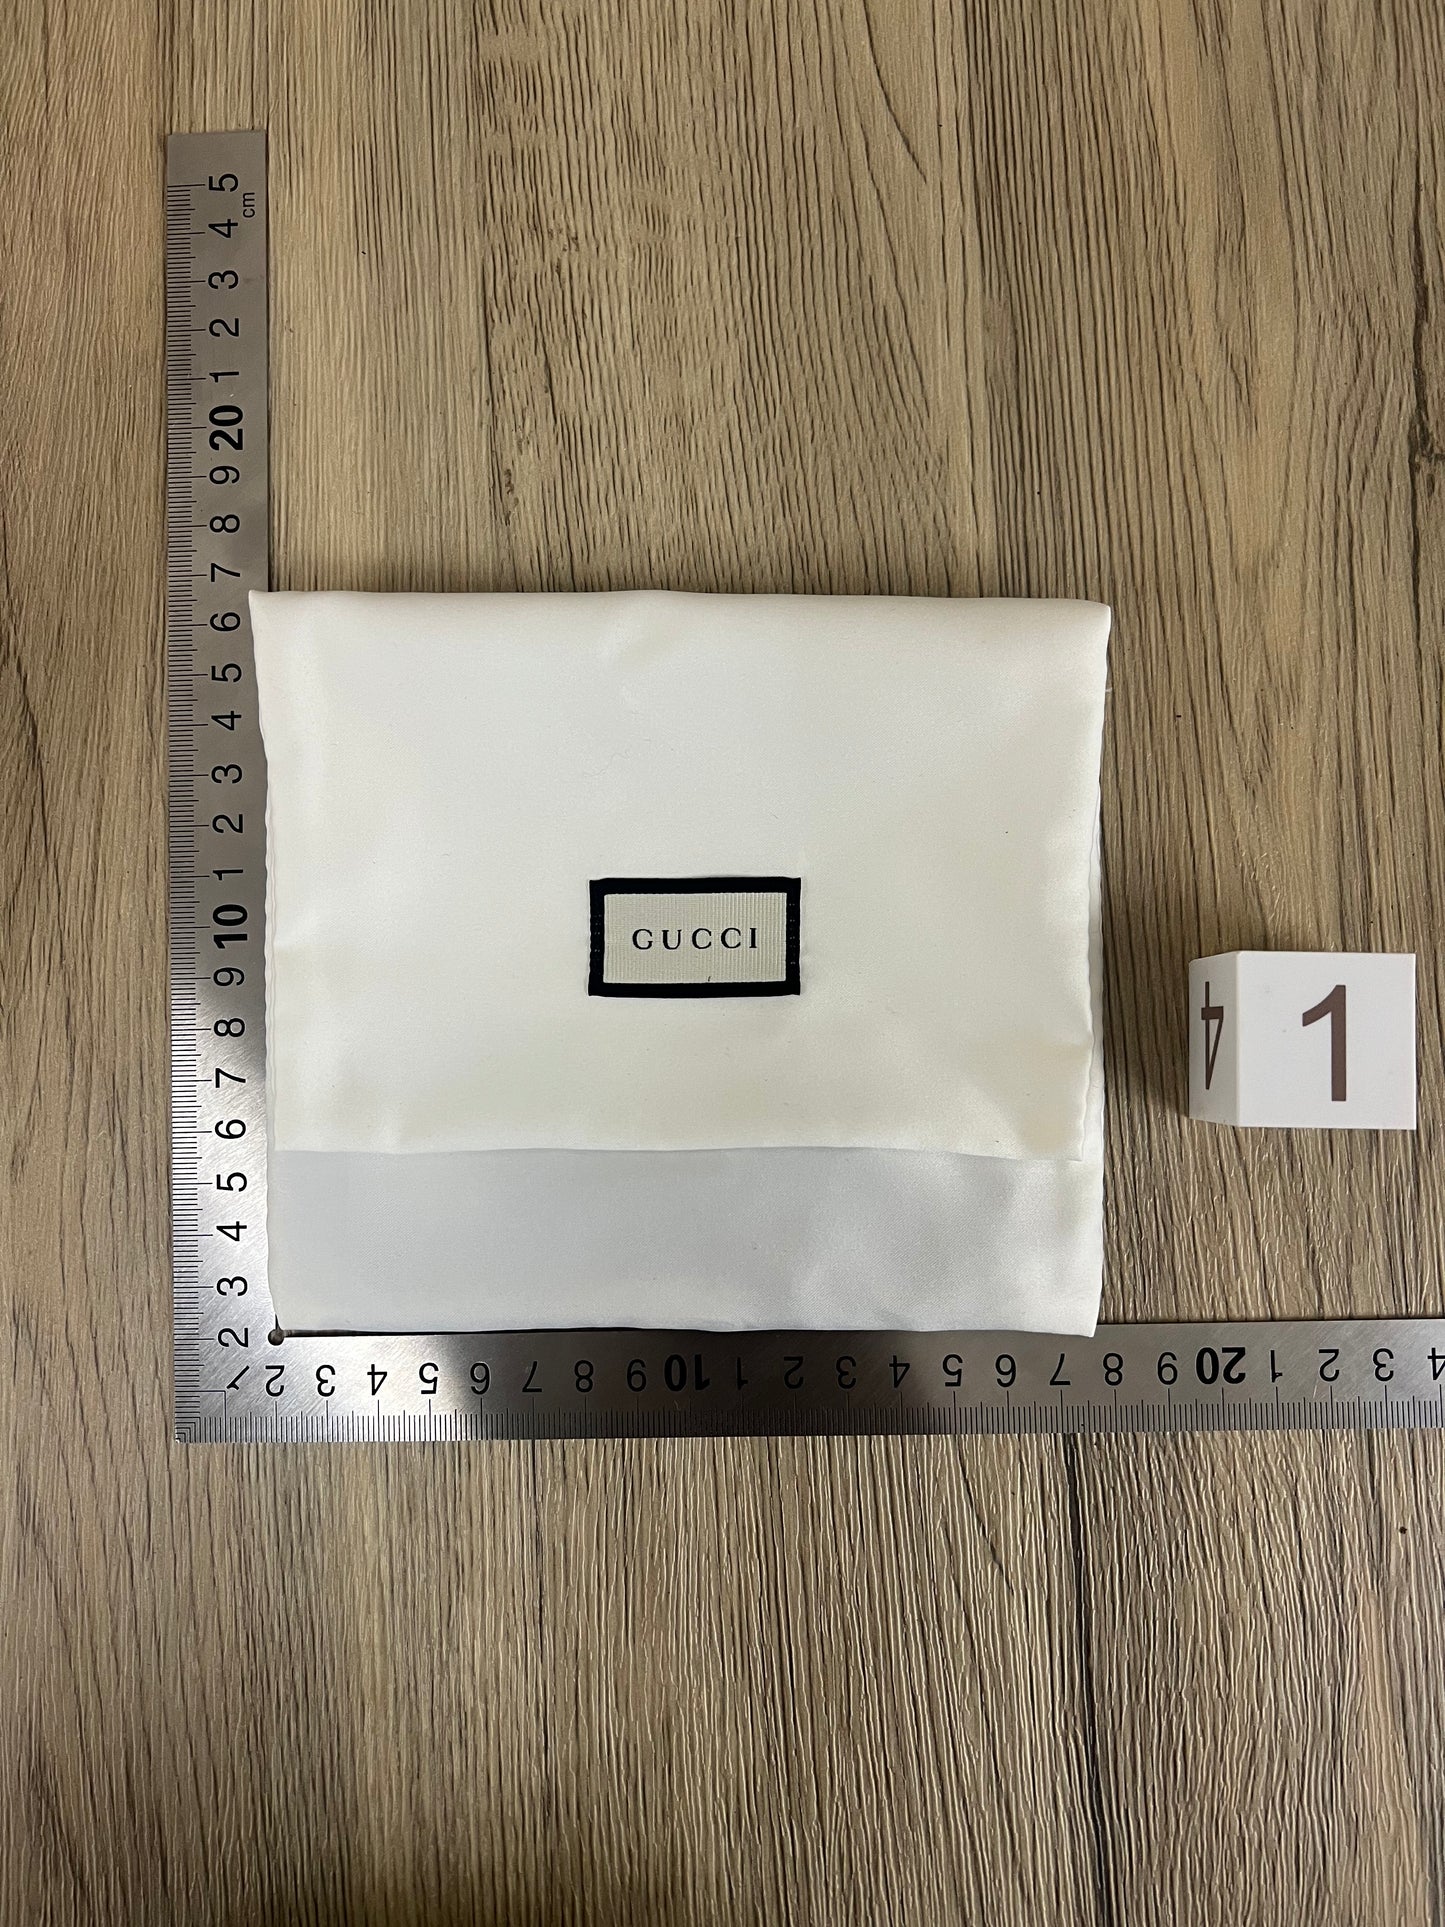 GUCCI Brand Dust Bag Cloth Bag 9 Styles 17Sep22